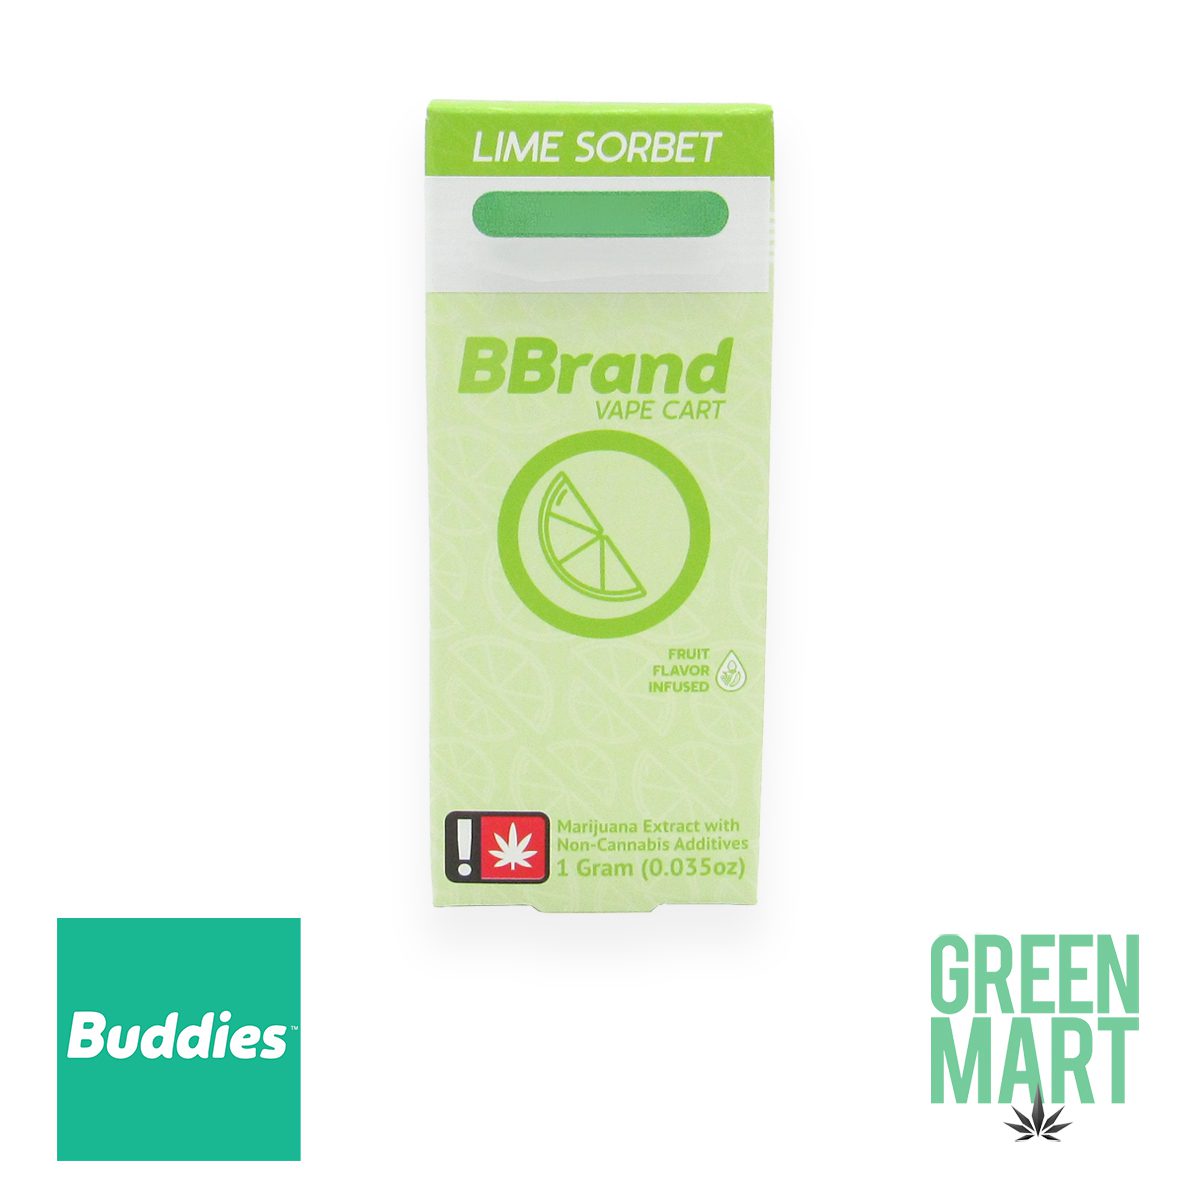 Buddies BBrand Lime Sorbet Flavored Vape Cartridge